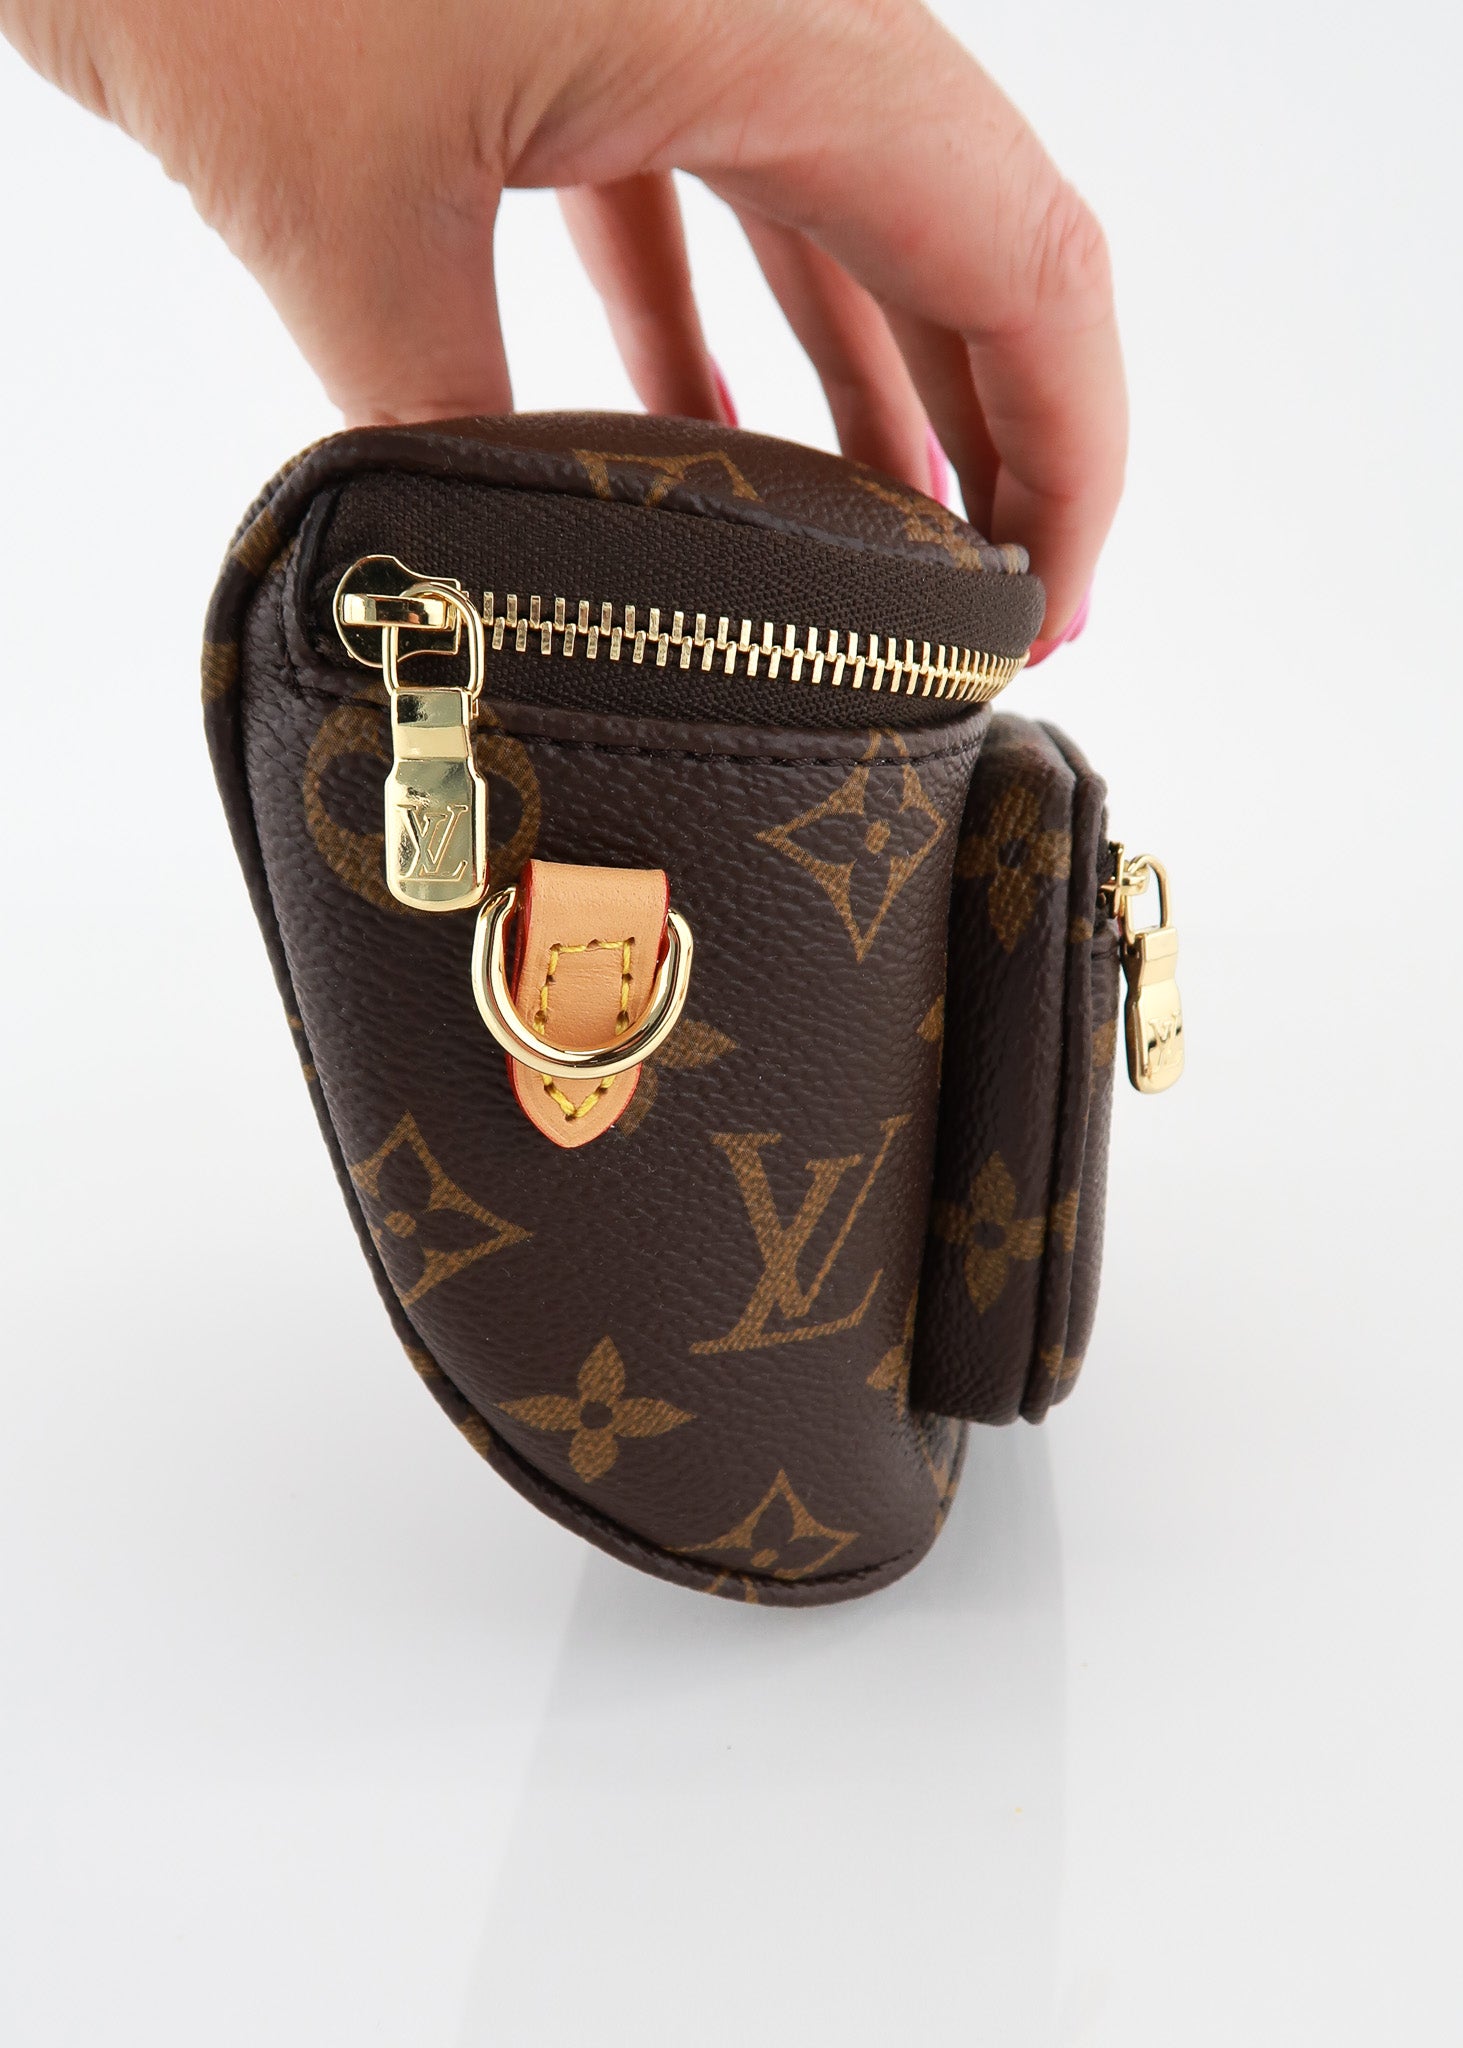 New in Box Authentic Louis Vuitton Monogram Party Bumbag Bracelet